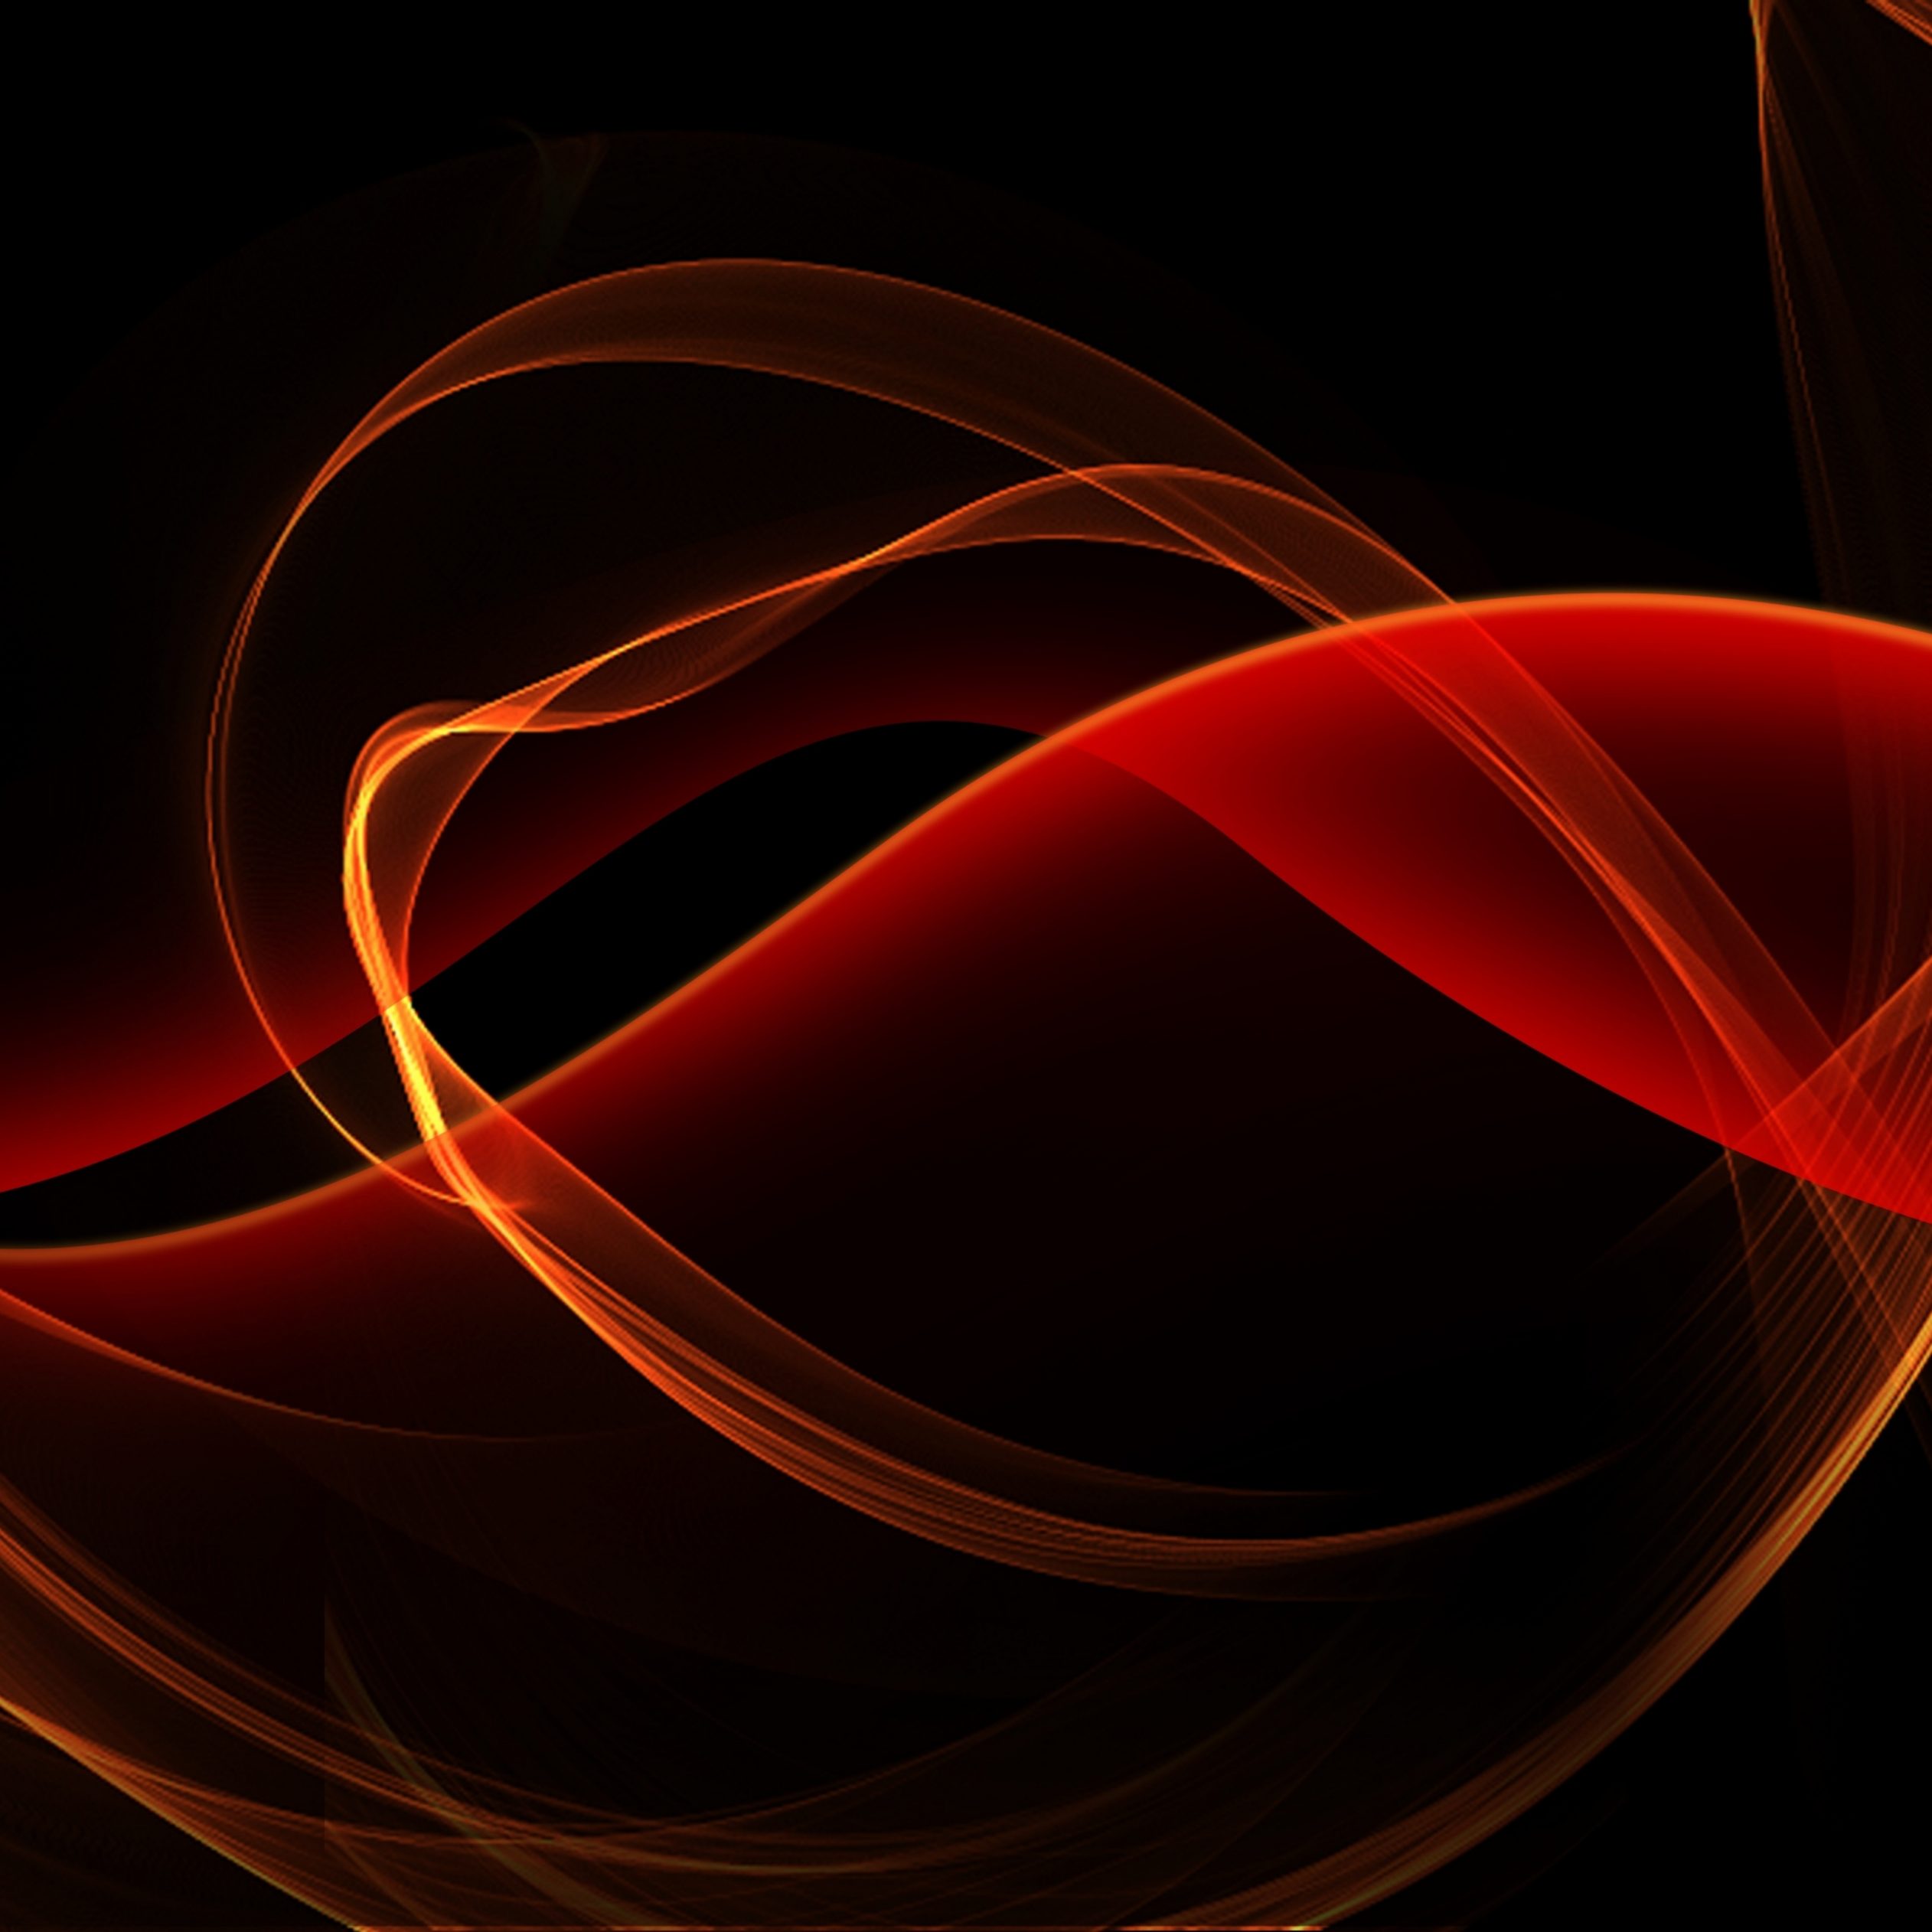 2524x2524 Parallax wallpaper 4k Black and Red Glowing Curves iPad Wallpaper 2524x2524 pixels resolution